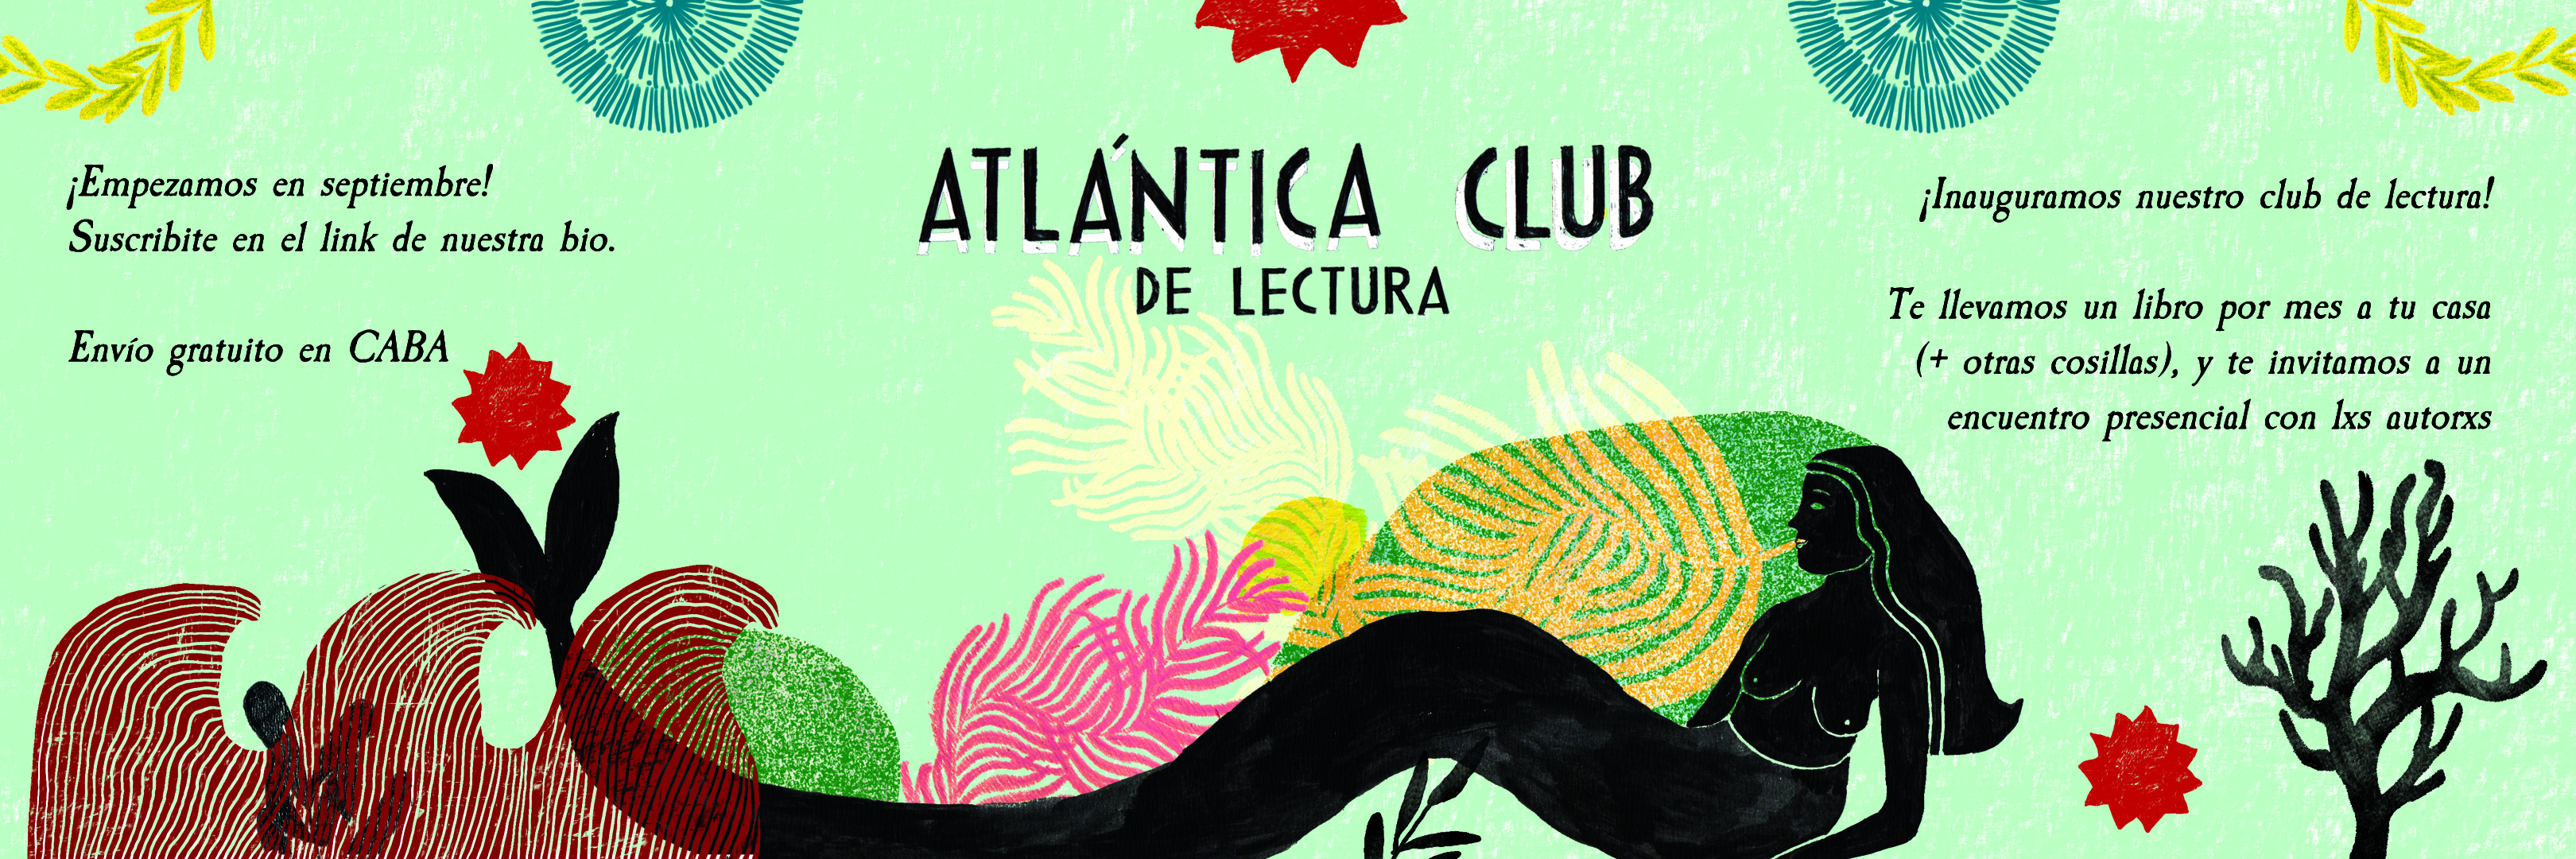 Atlántica Club de Lectura